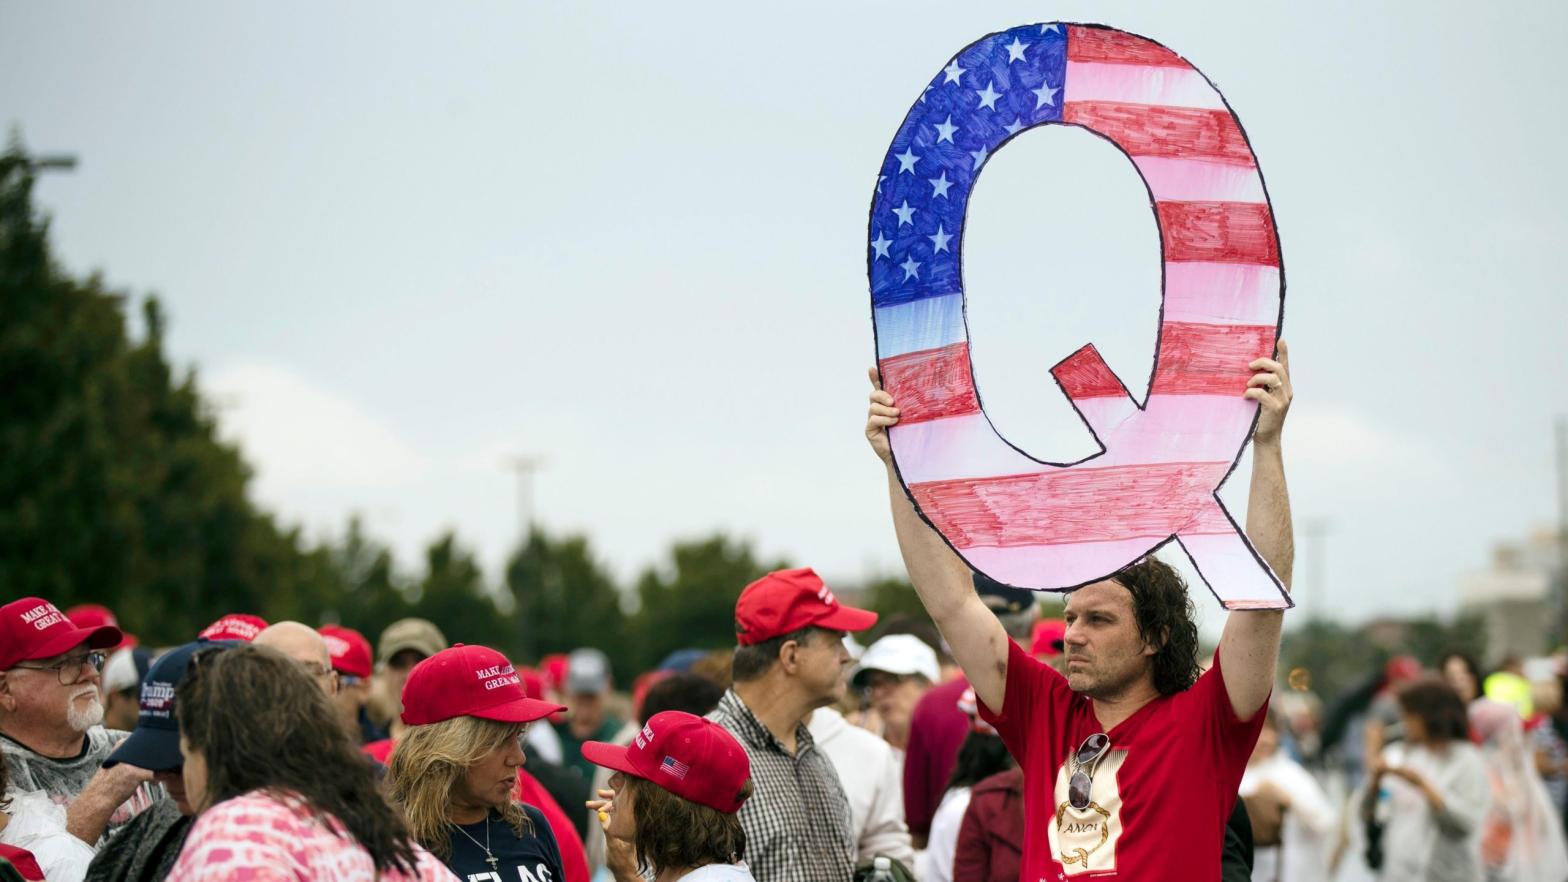 A QAnon follower at a rally for Donald Trump in Wilkes-Barre, Pennsylvania, in August 2018. (Photo: Matt Rourke, AP)